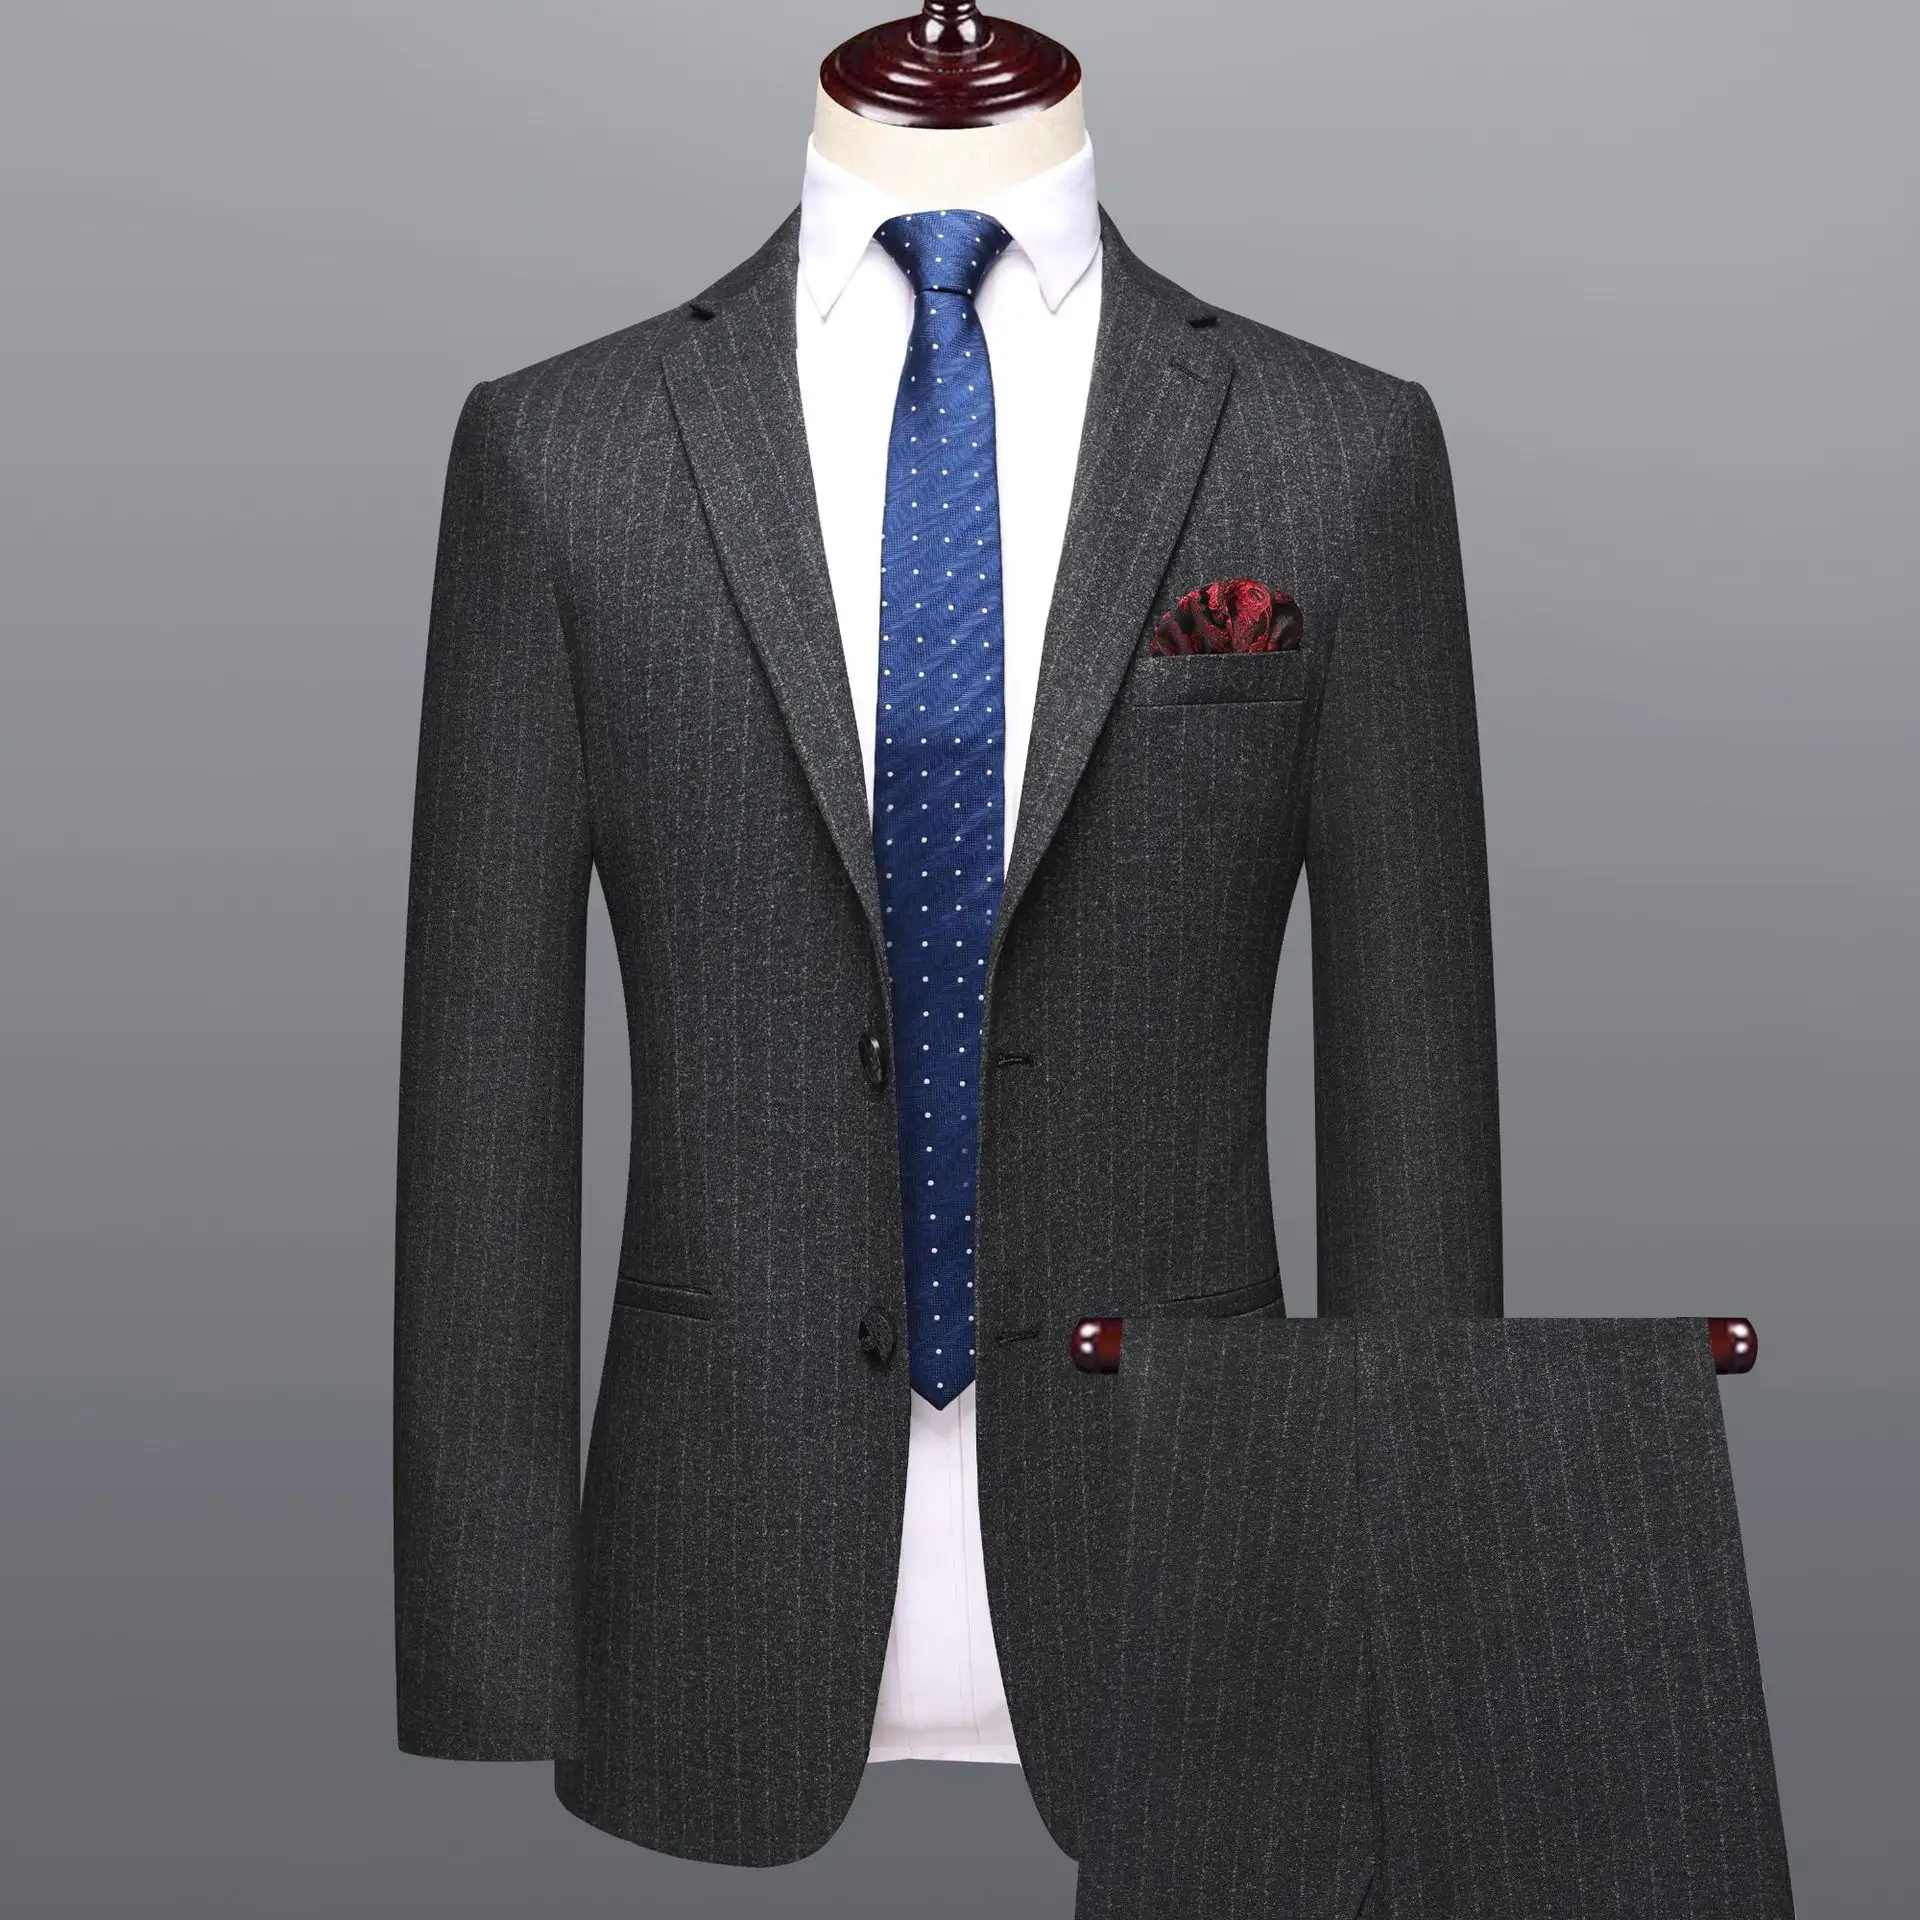 New Design Italian Suit Men's Jacket Business Casual Autumn and Winter Groom Wedding Professional Men's Suit